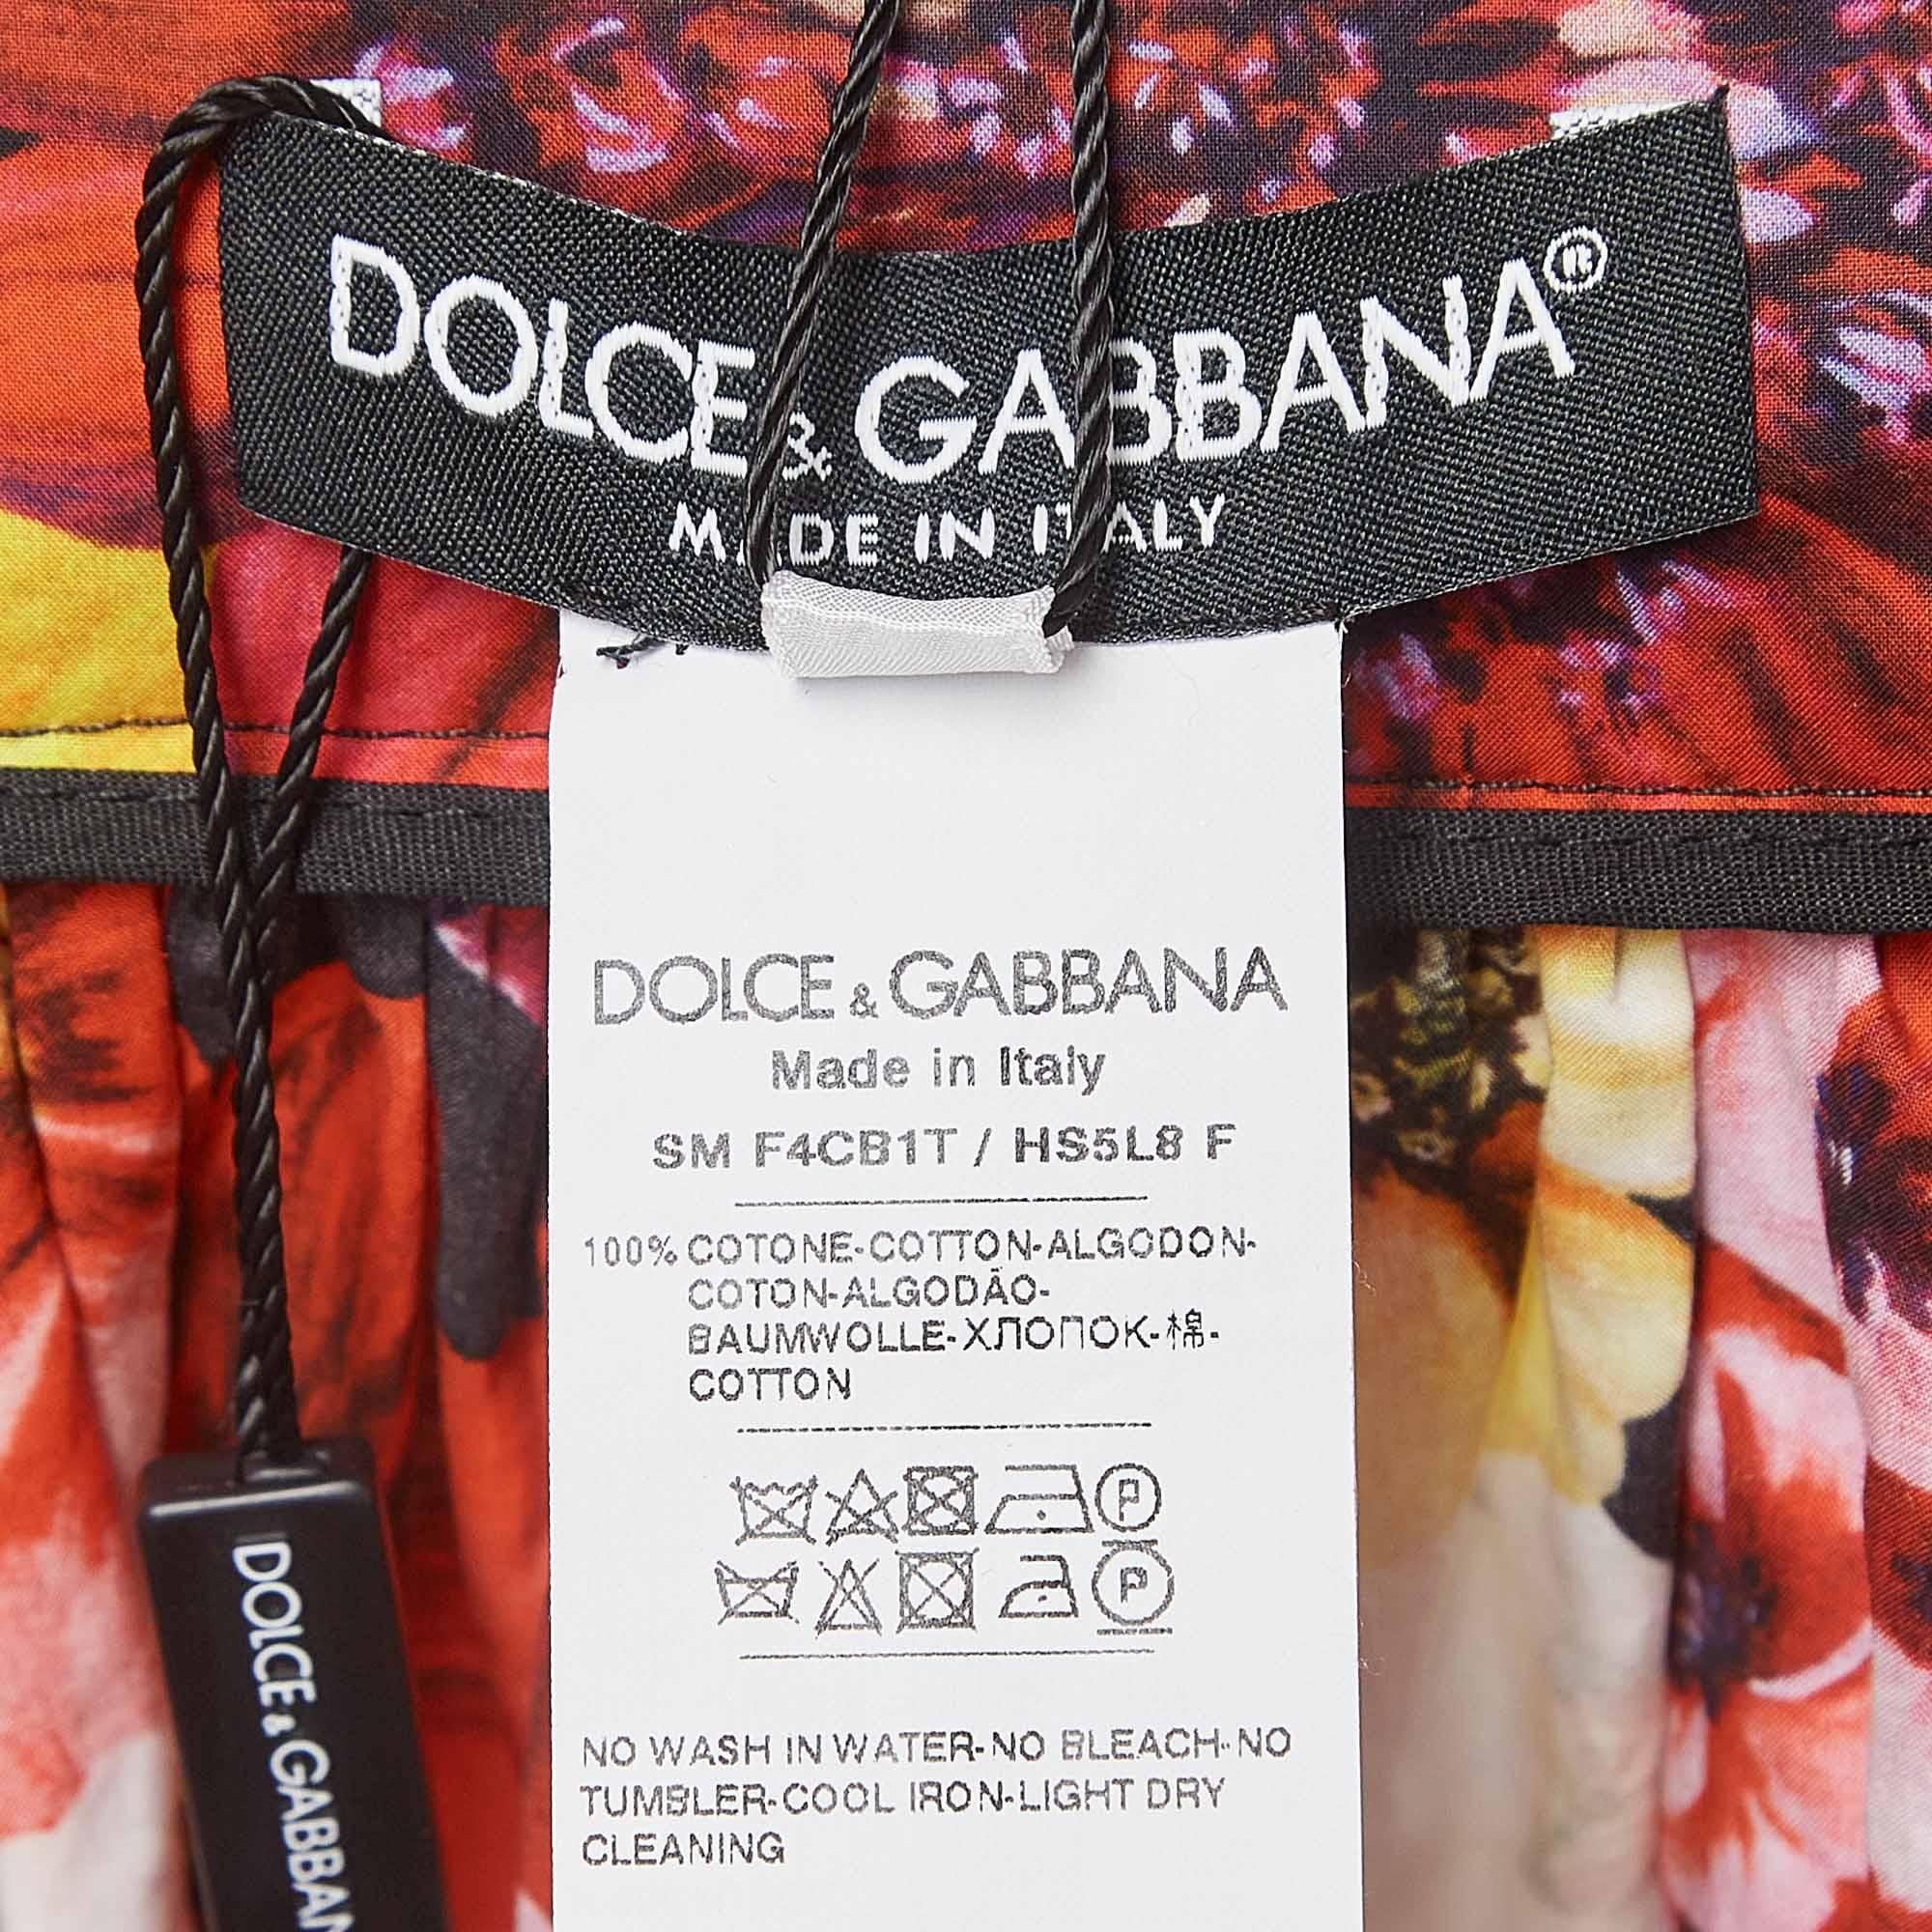 Dolce & Gabbana Multicolor Floral Printed Cotton Poplin Short Skirt S In Excellent Condition For Sale In Dubai, Al Qouz 2